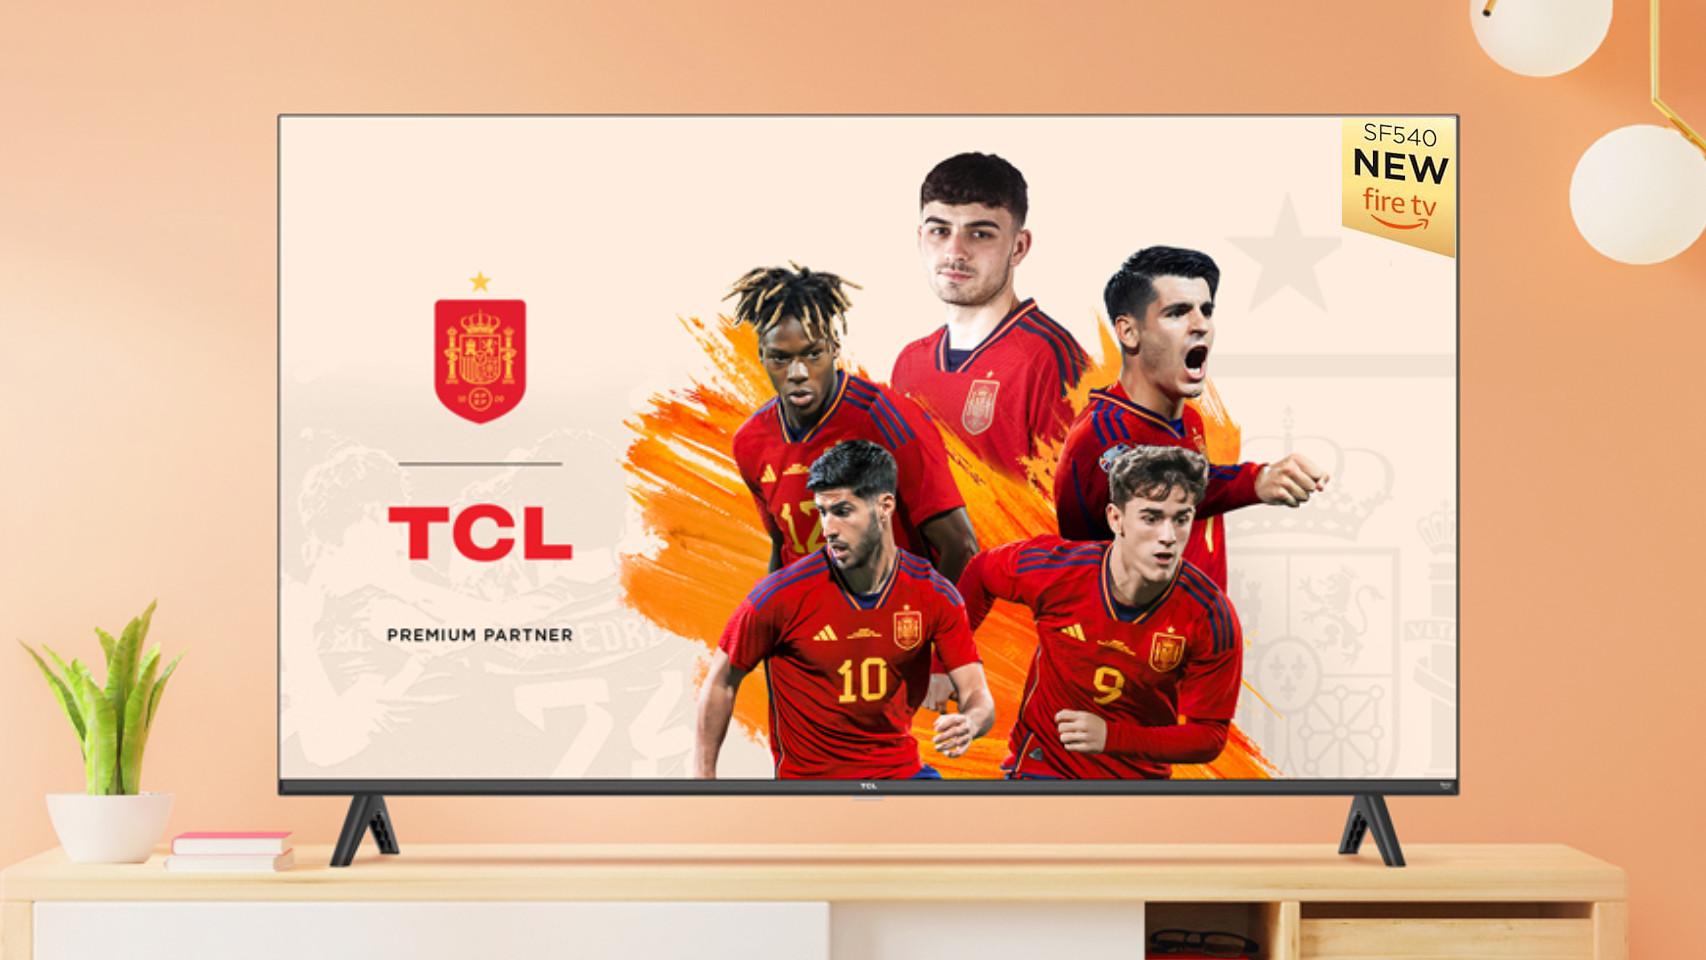 Nuevos televisores baratos de Xiaomi en España con diseño premium